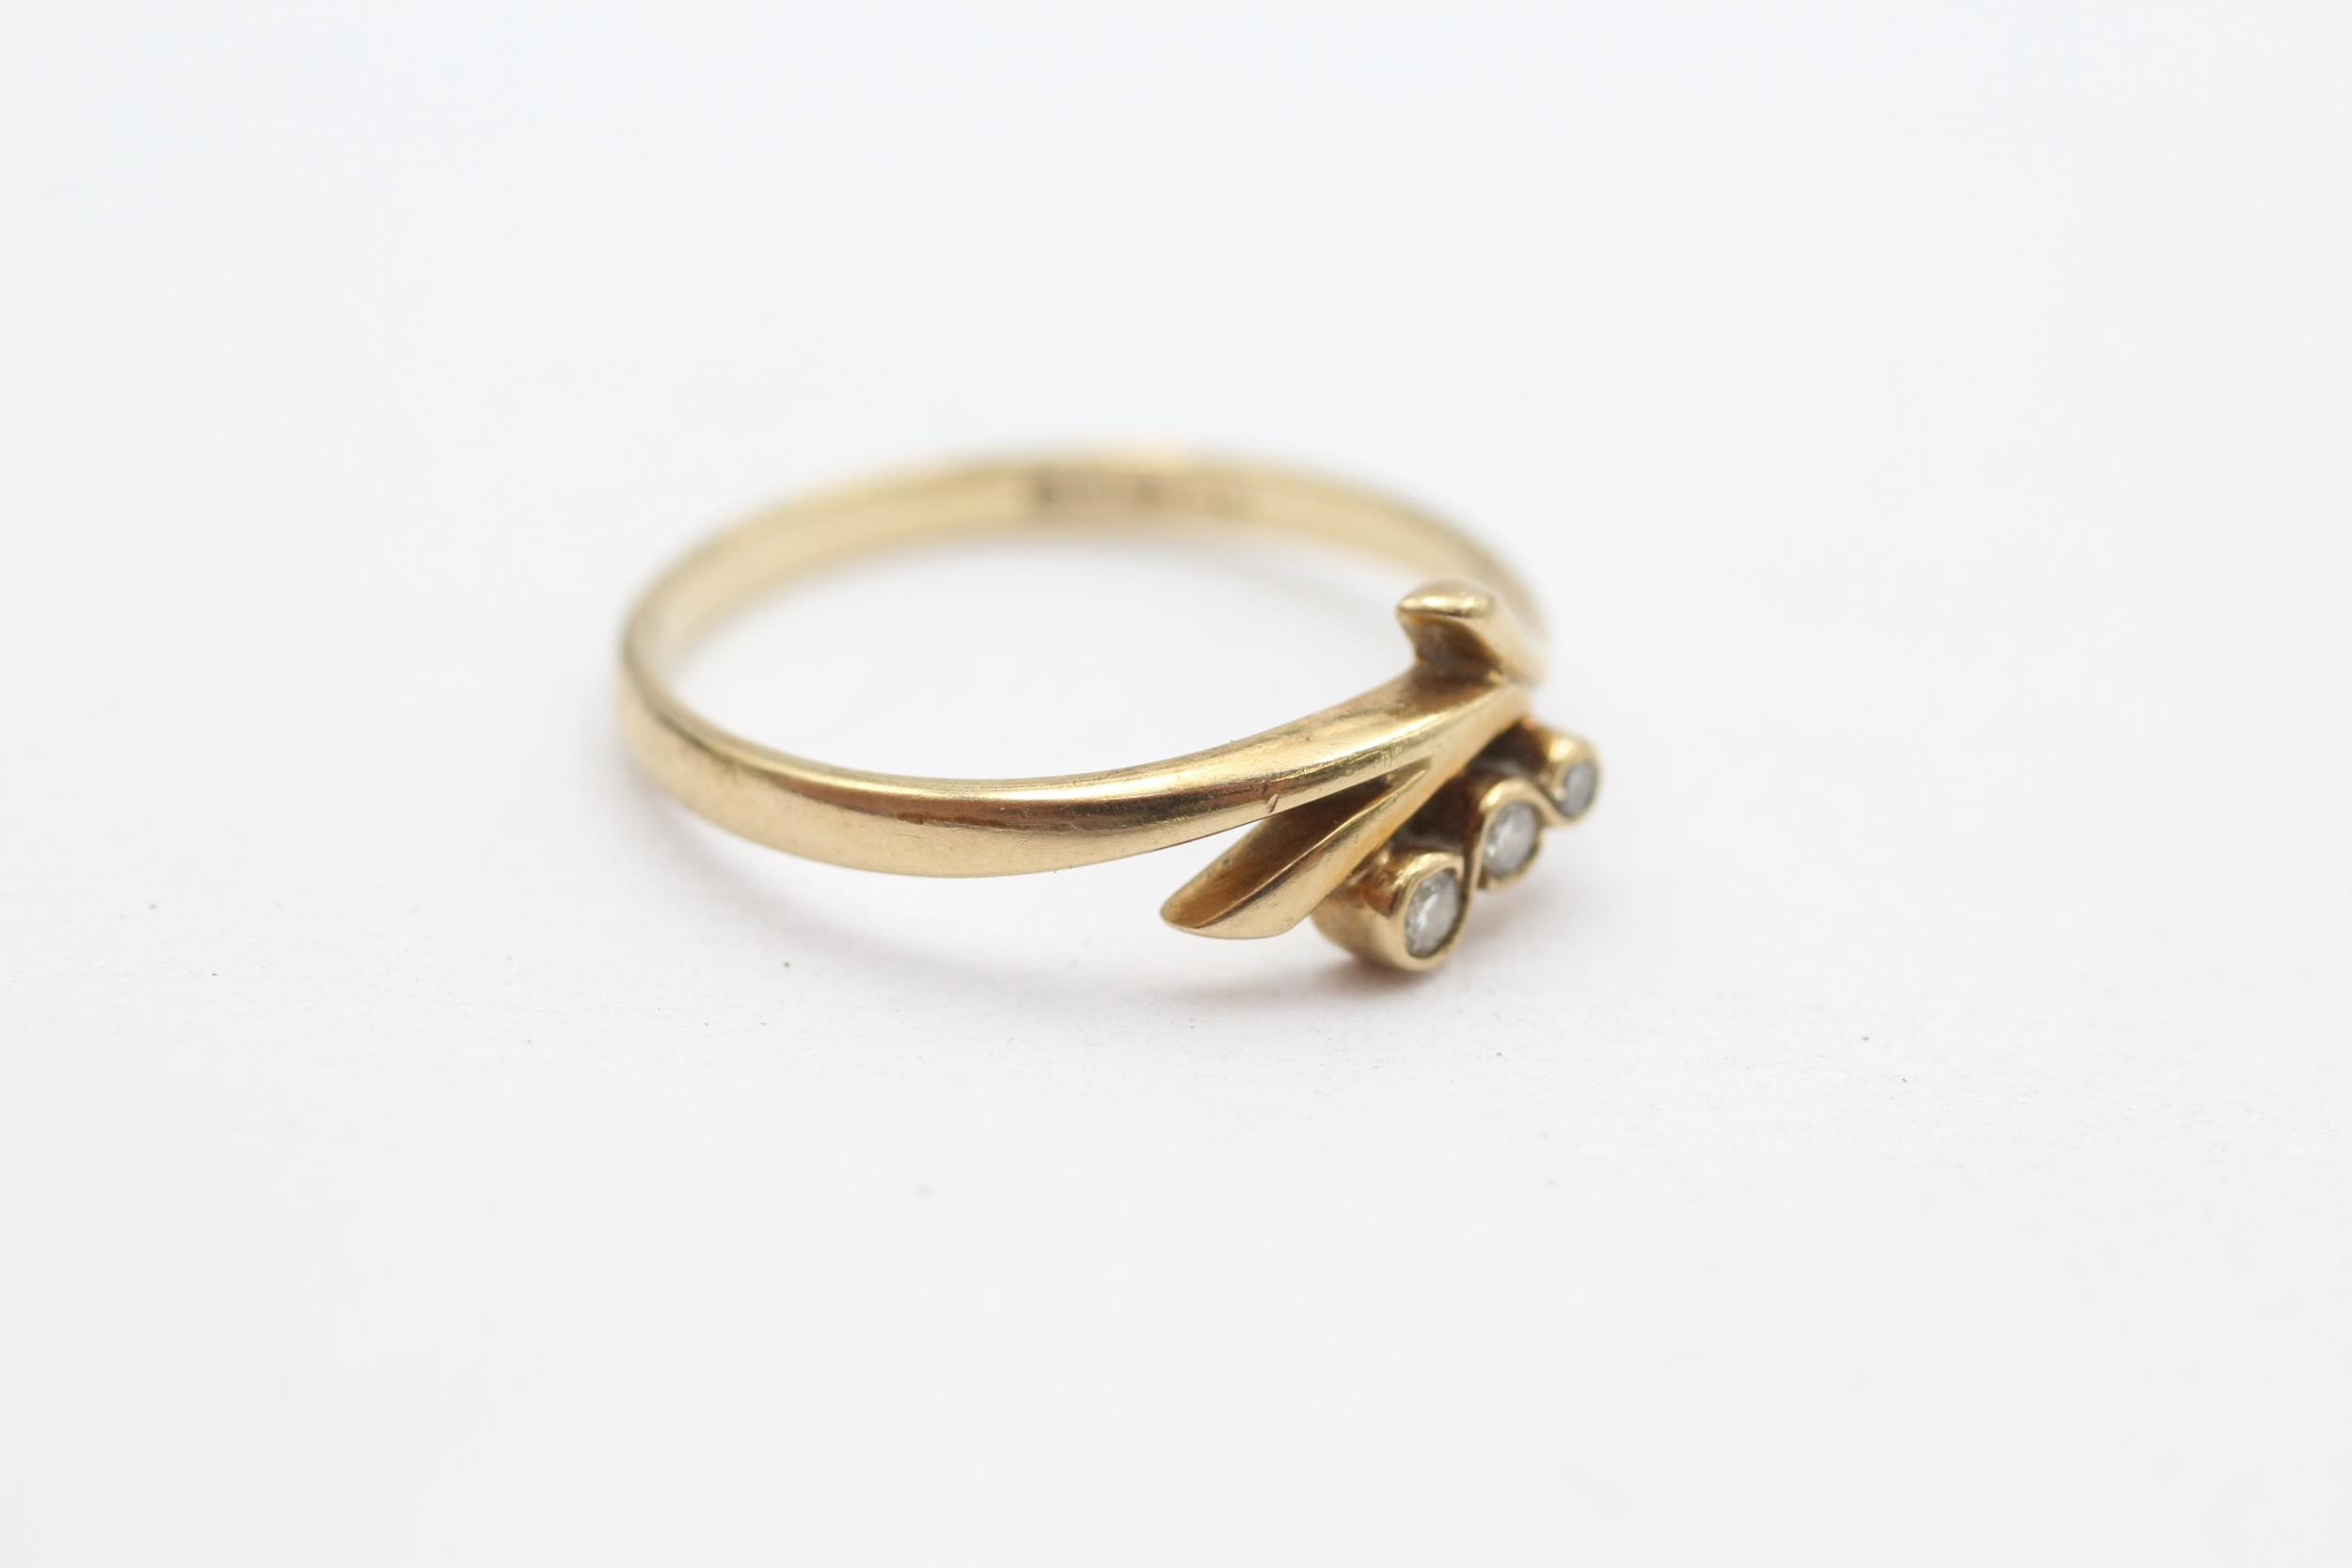 9ct gold three stone diamond ring twig design Size N - 1.3 g - Image 2 of 4